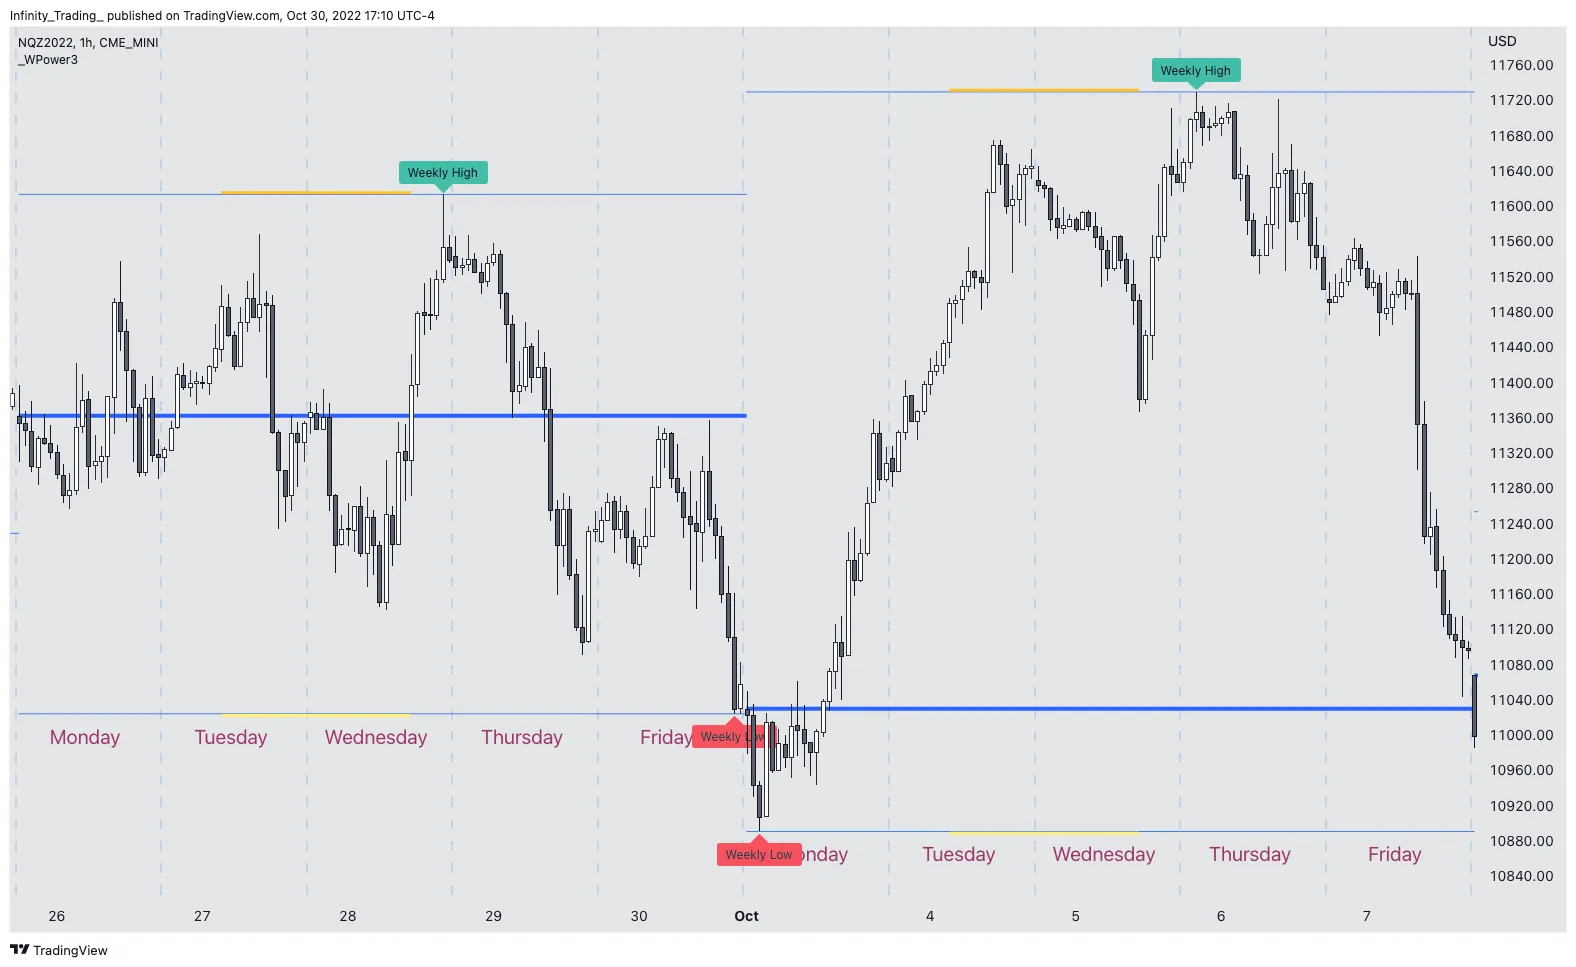 Weekly Power 3 TradingView Indicator Image 2